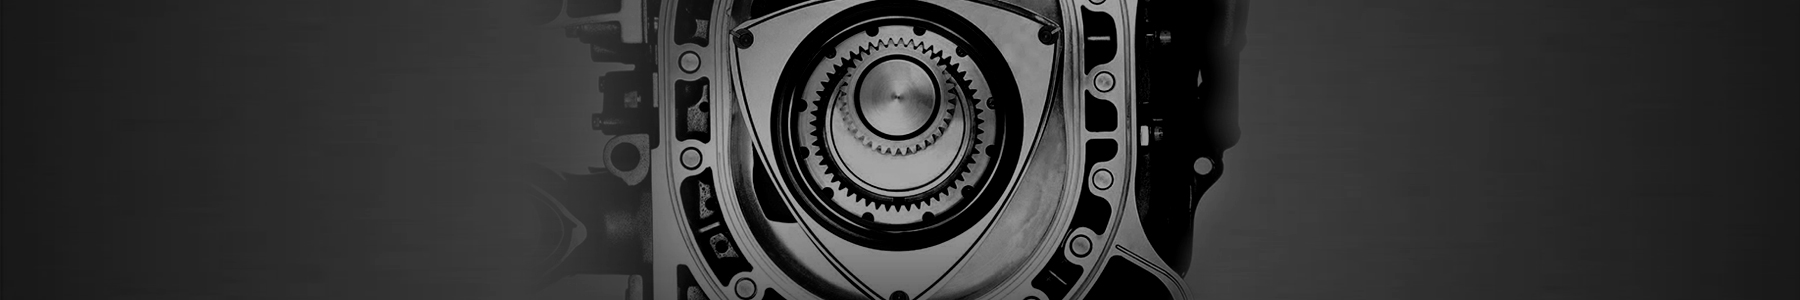 Mazda 第 章 未踏の世界に挑んだロータリーエンジン四十七士たち ロータリーエンジン開発物語